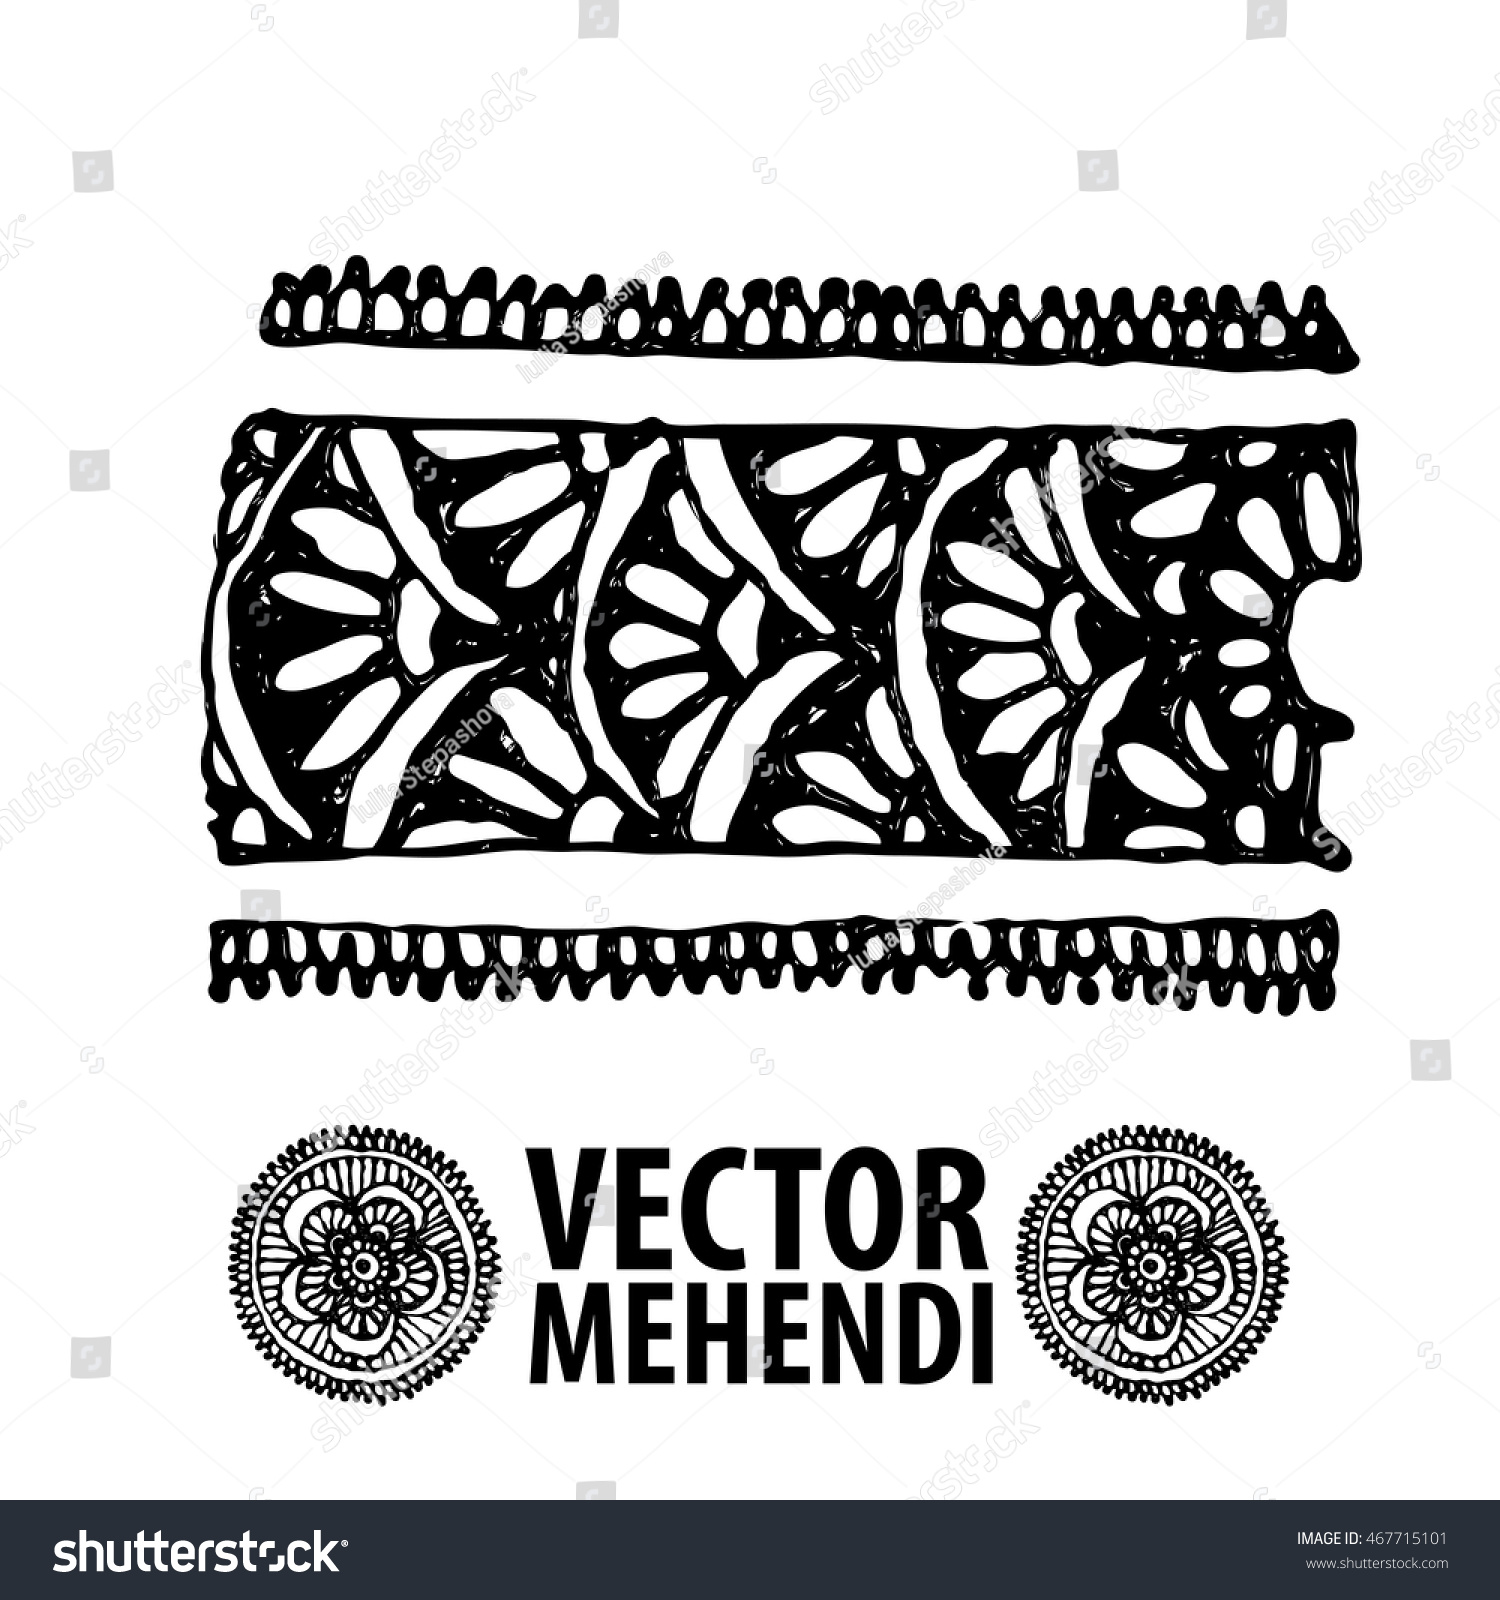 Vector Set Illustration Mehendi Henna Tattoo Stock Vector Royalty Free Shutterstock